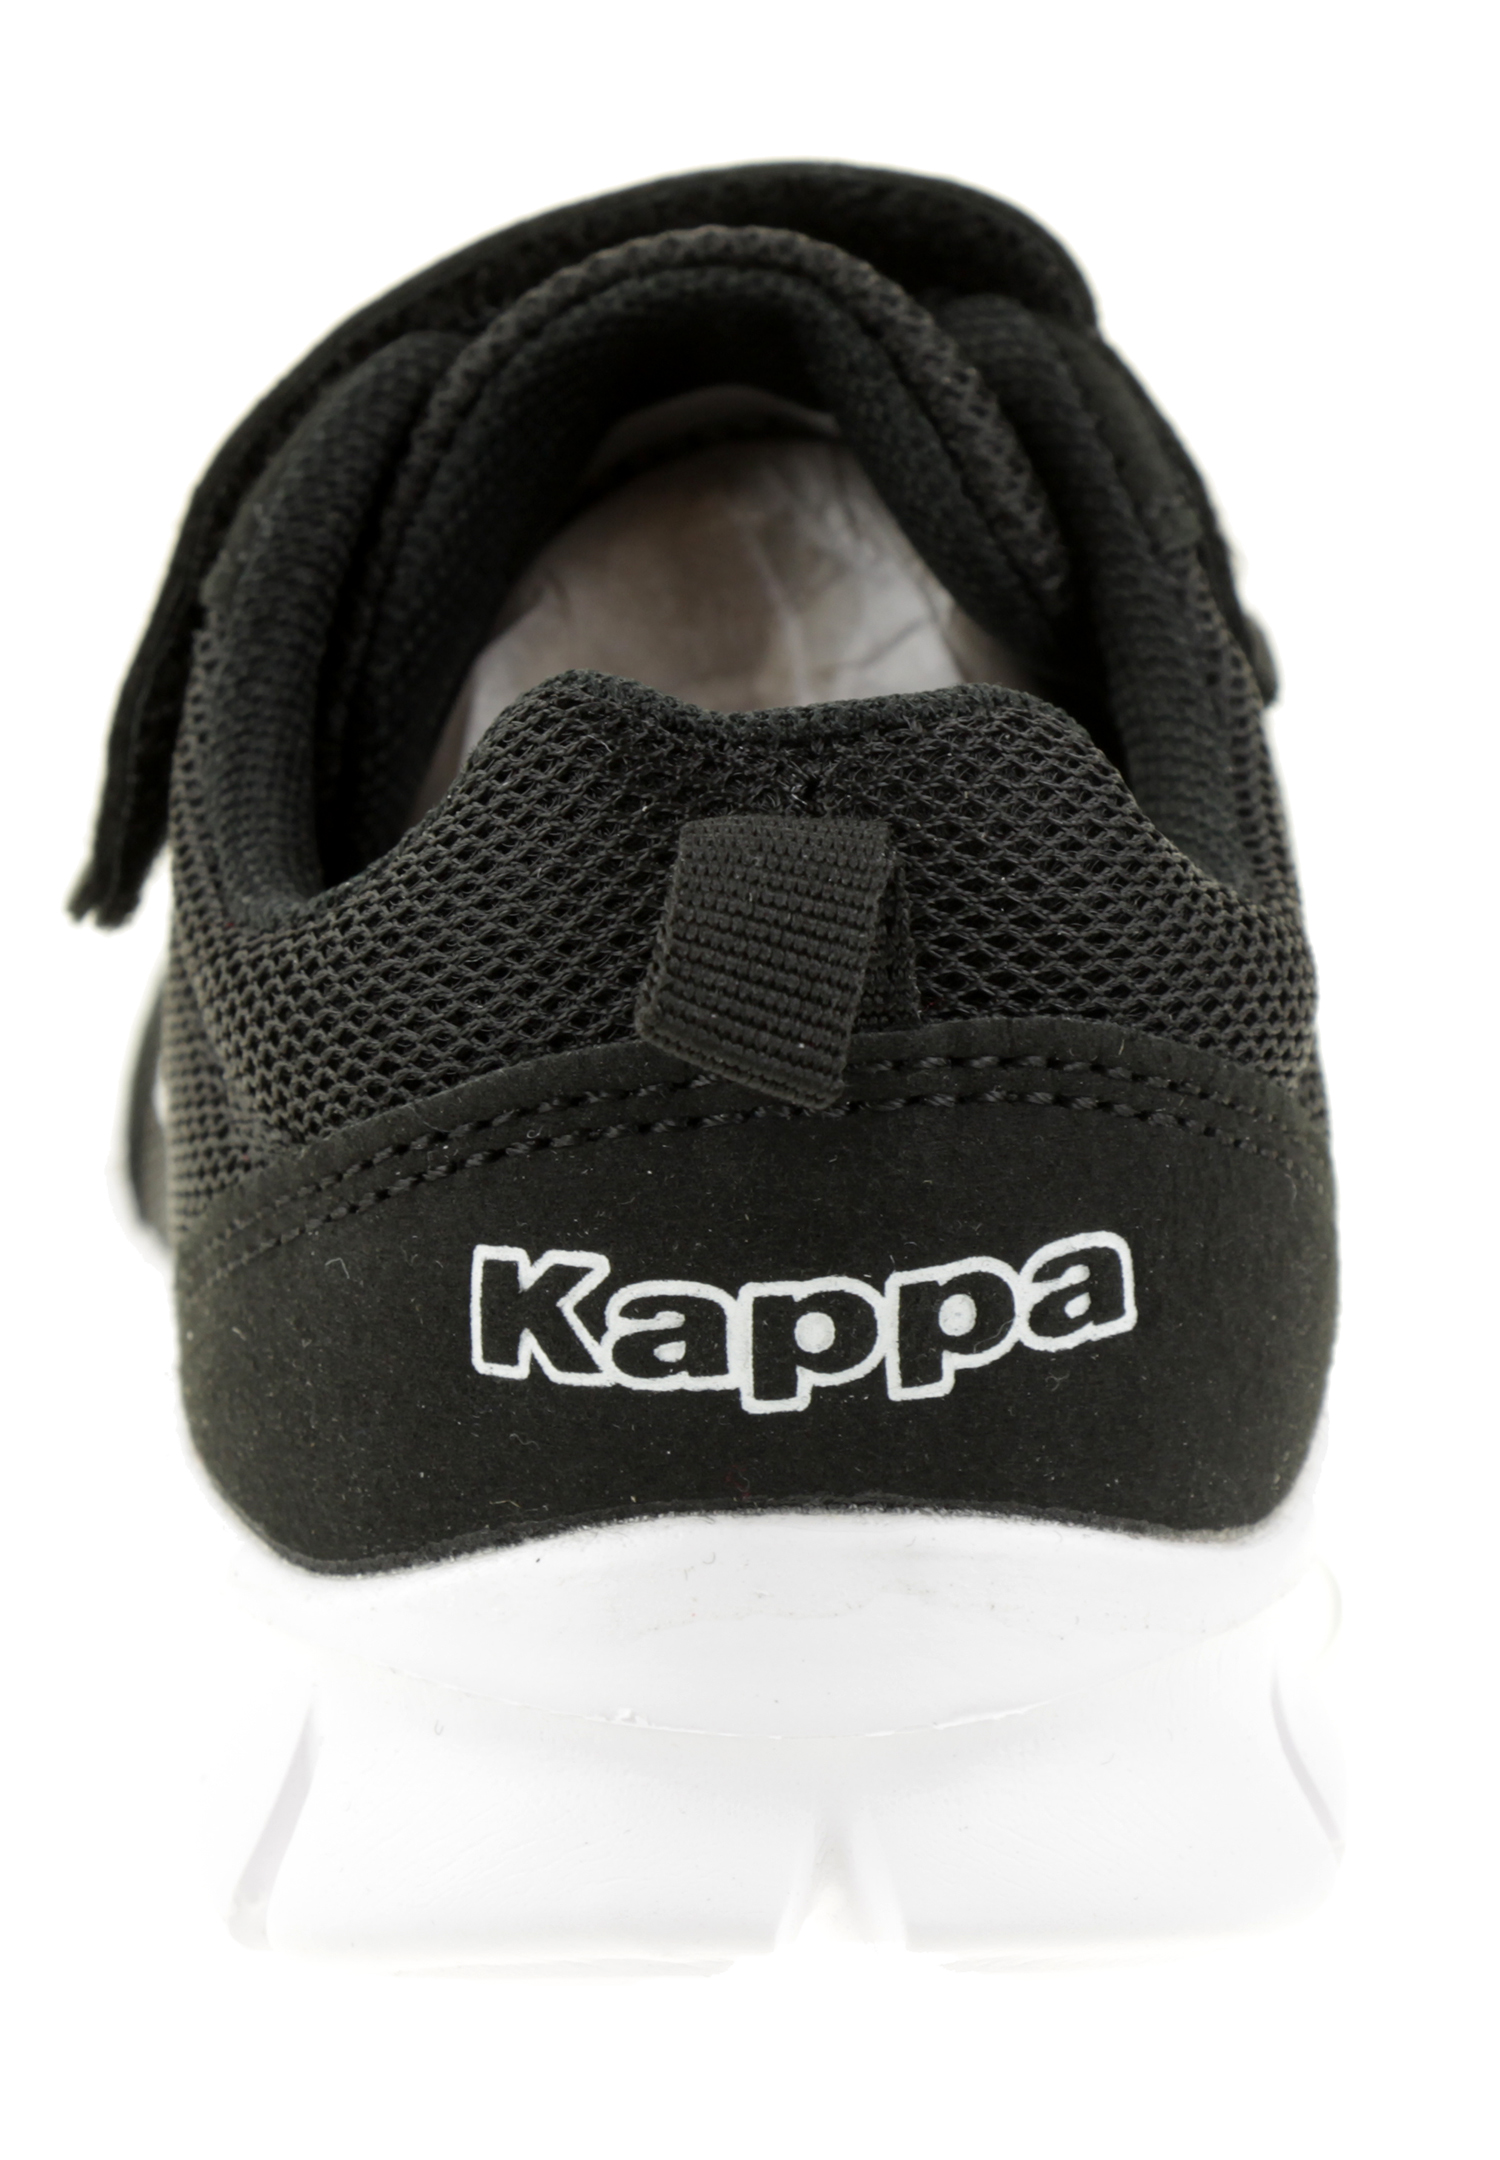 1110 Kappa Sneaker Black/white Turnschuh 260982K Unisex Kinder